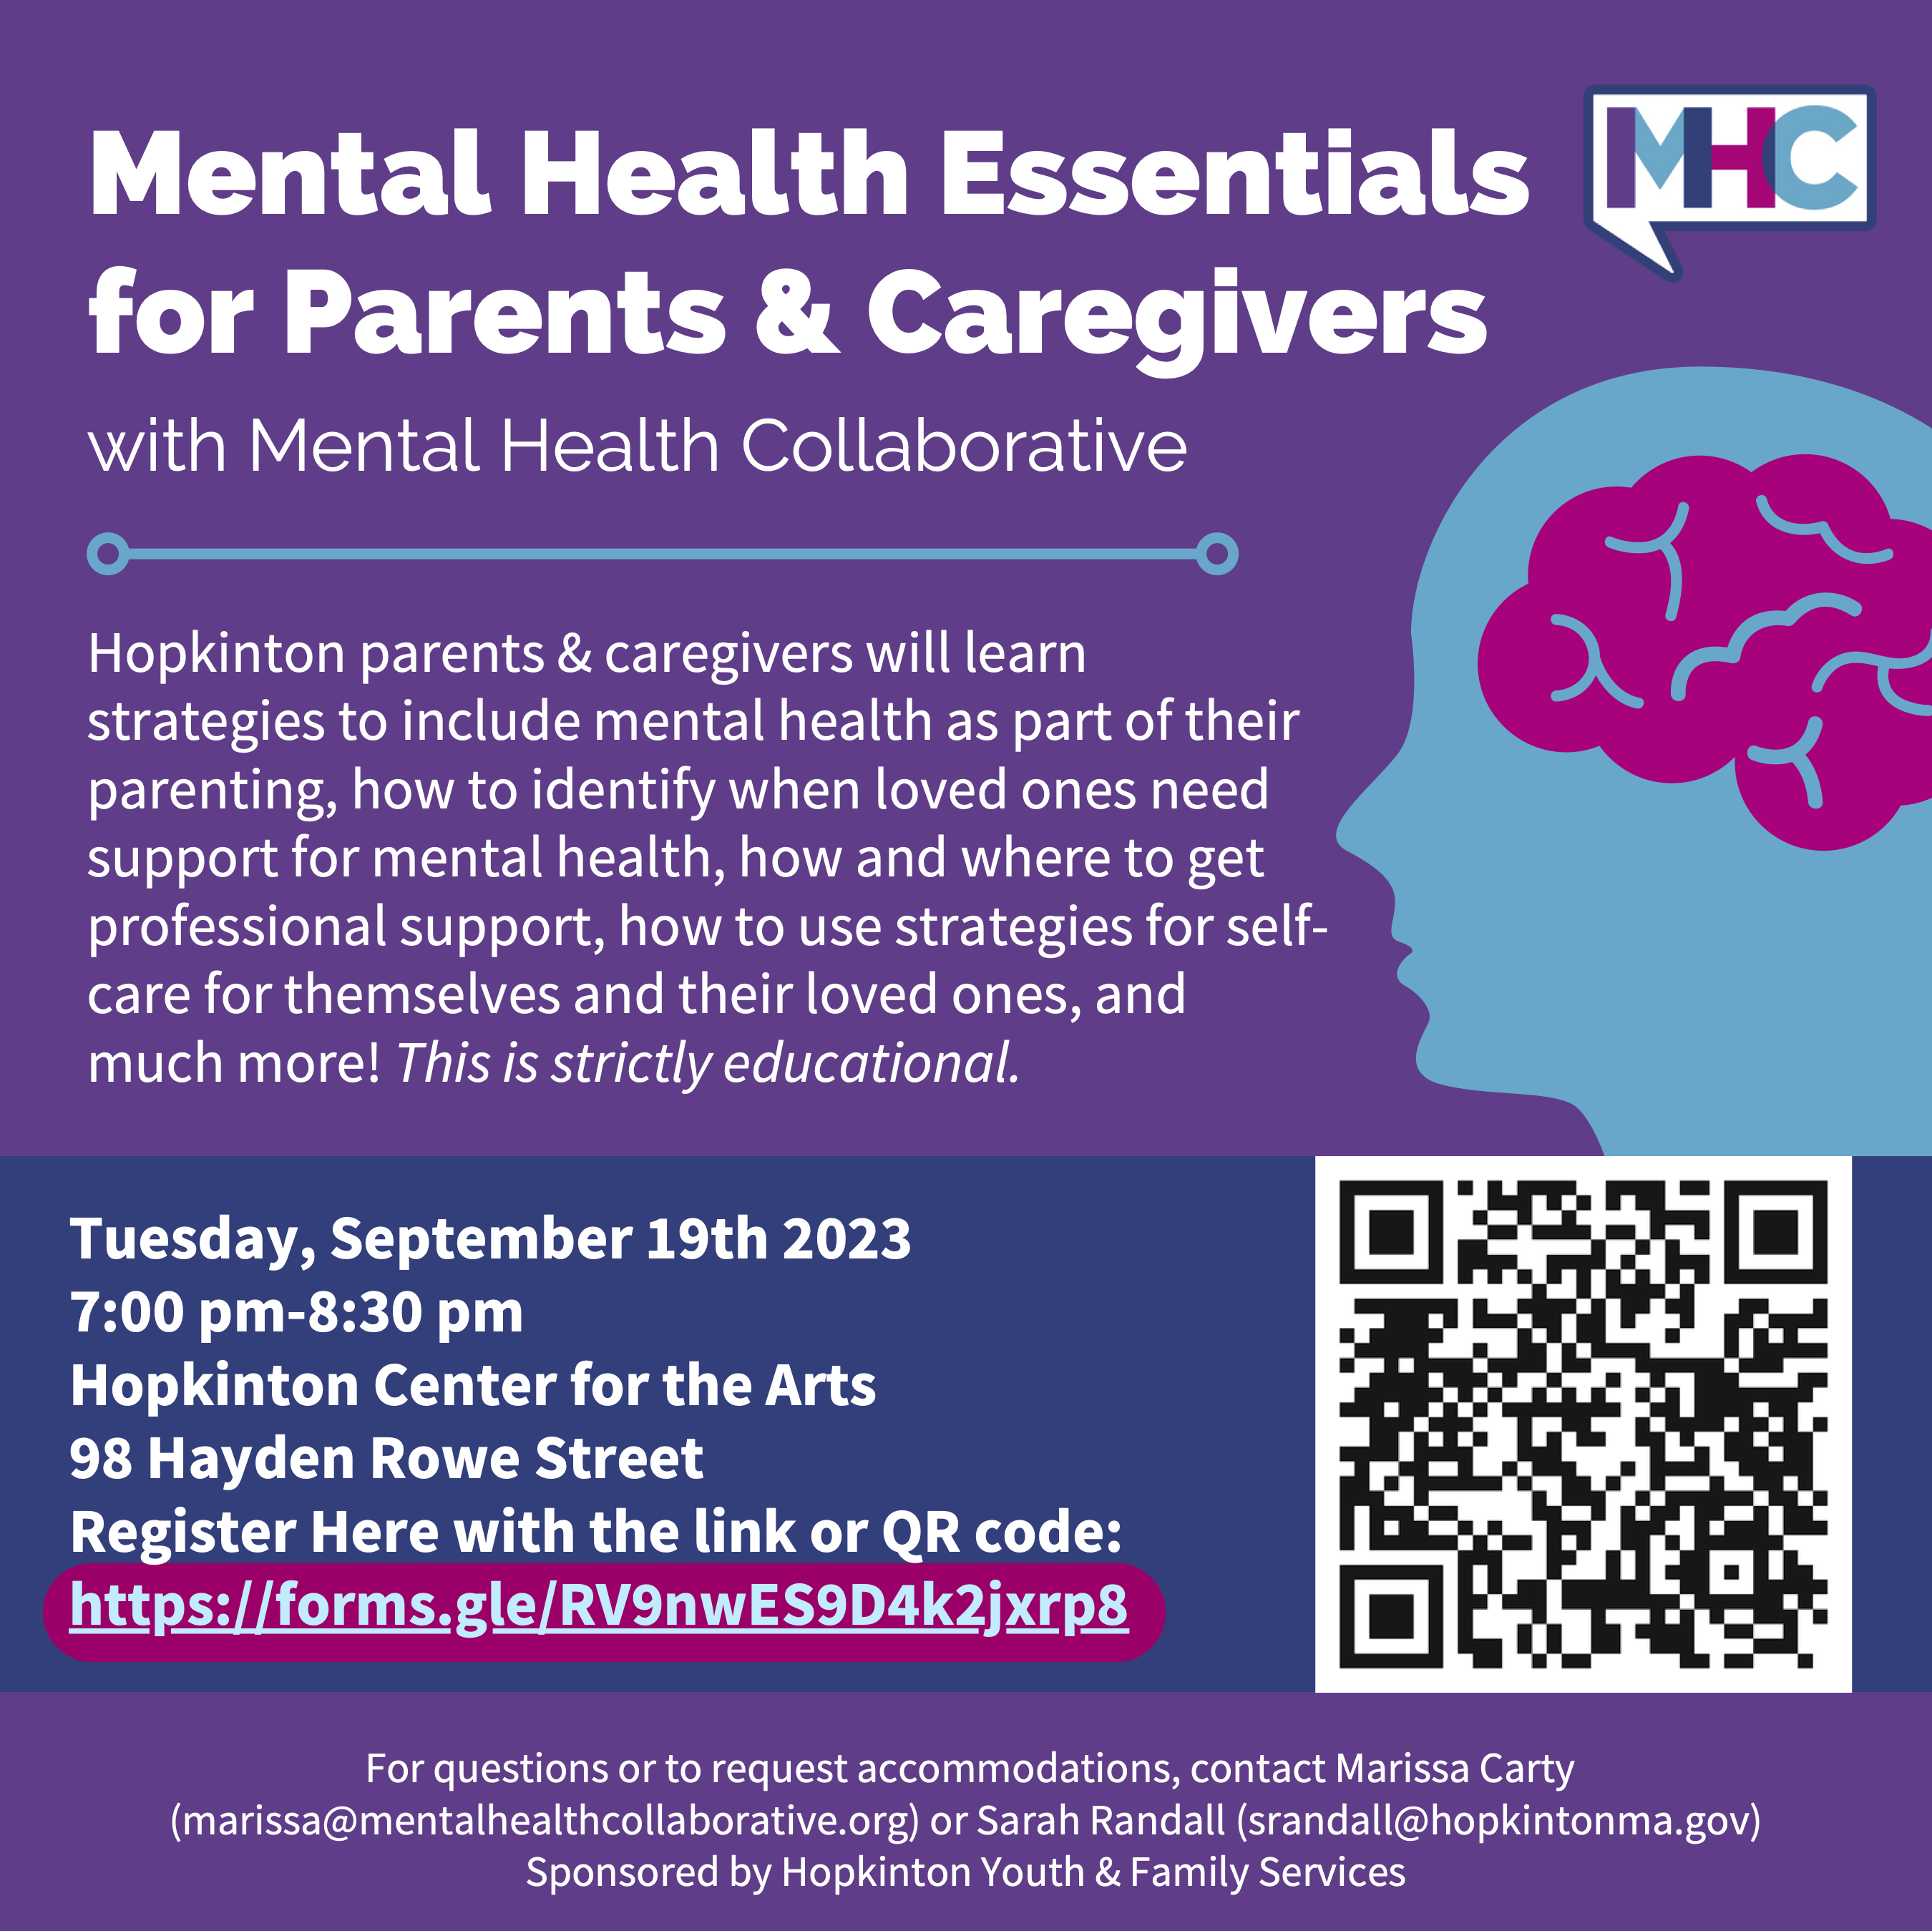 MHC Mental Health Essentials for Parents/Caregivers Sept. 19